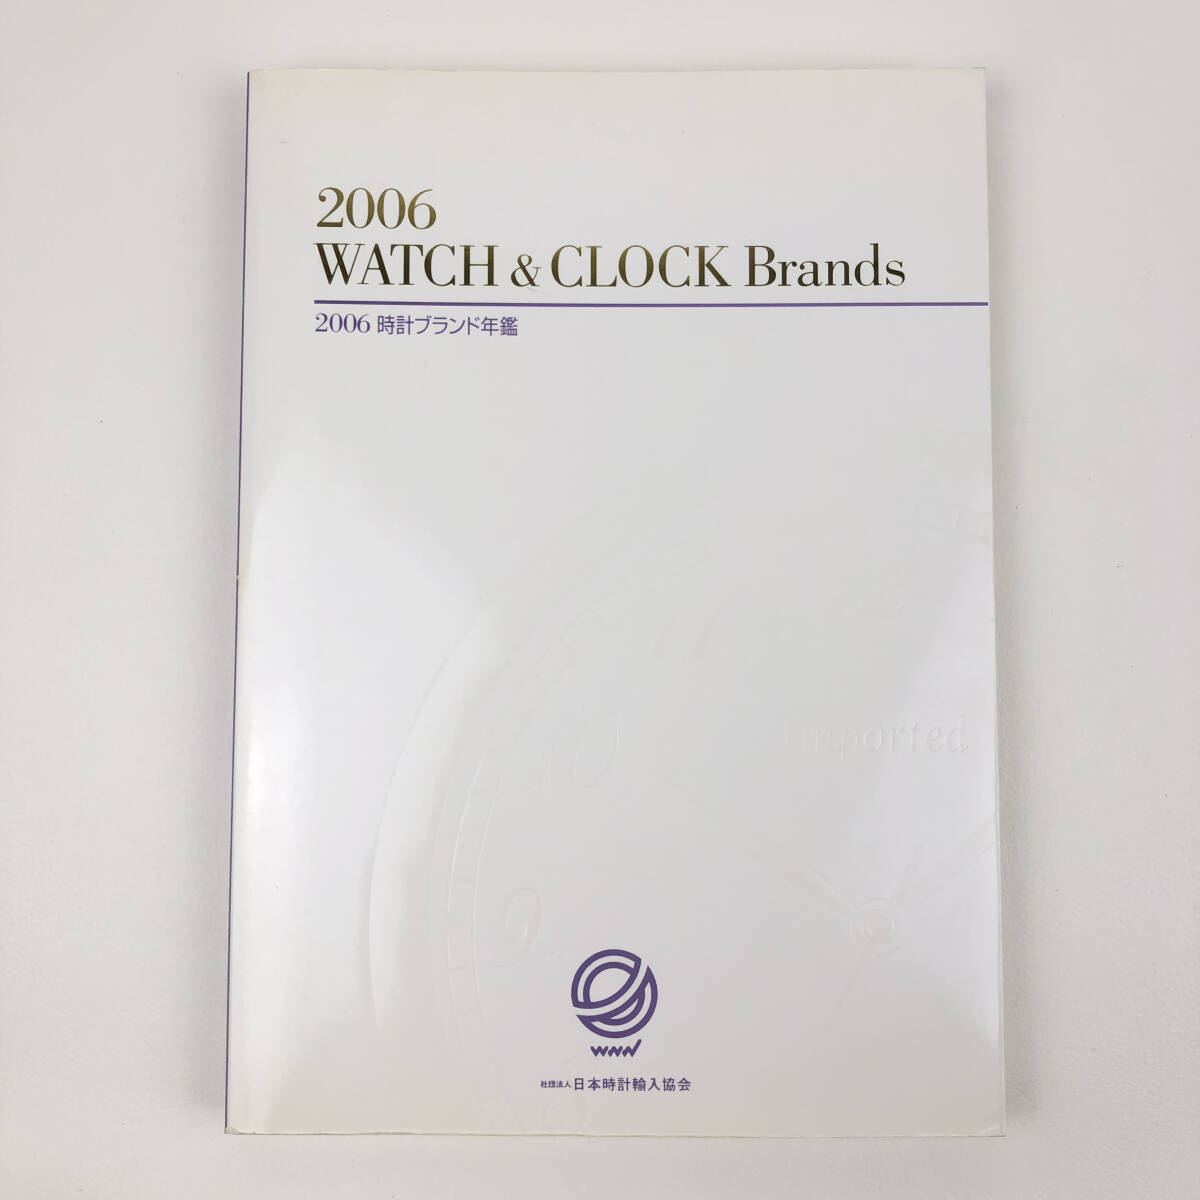 2006 WATCH & CLOCK Brands / 2006 時計部ランド年鑑 / 日本時計輸入協会 / 書籍 カタログ 本 管01